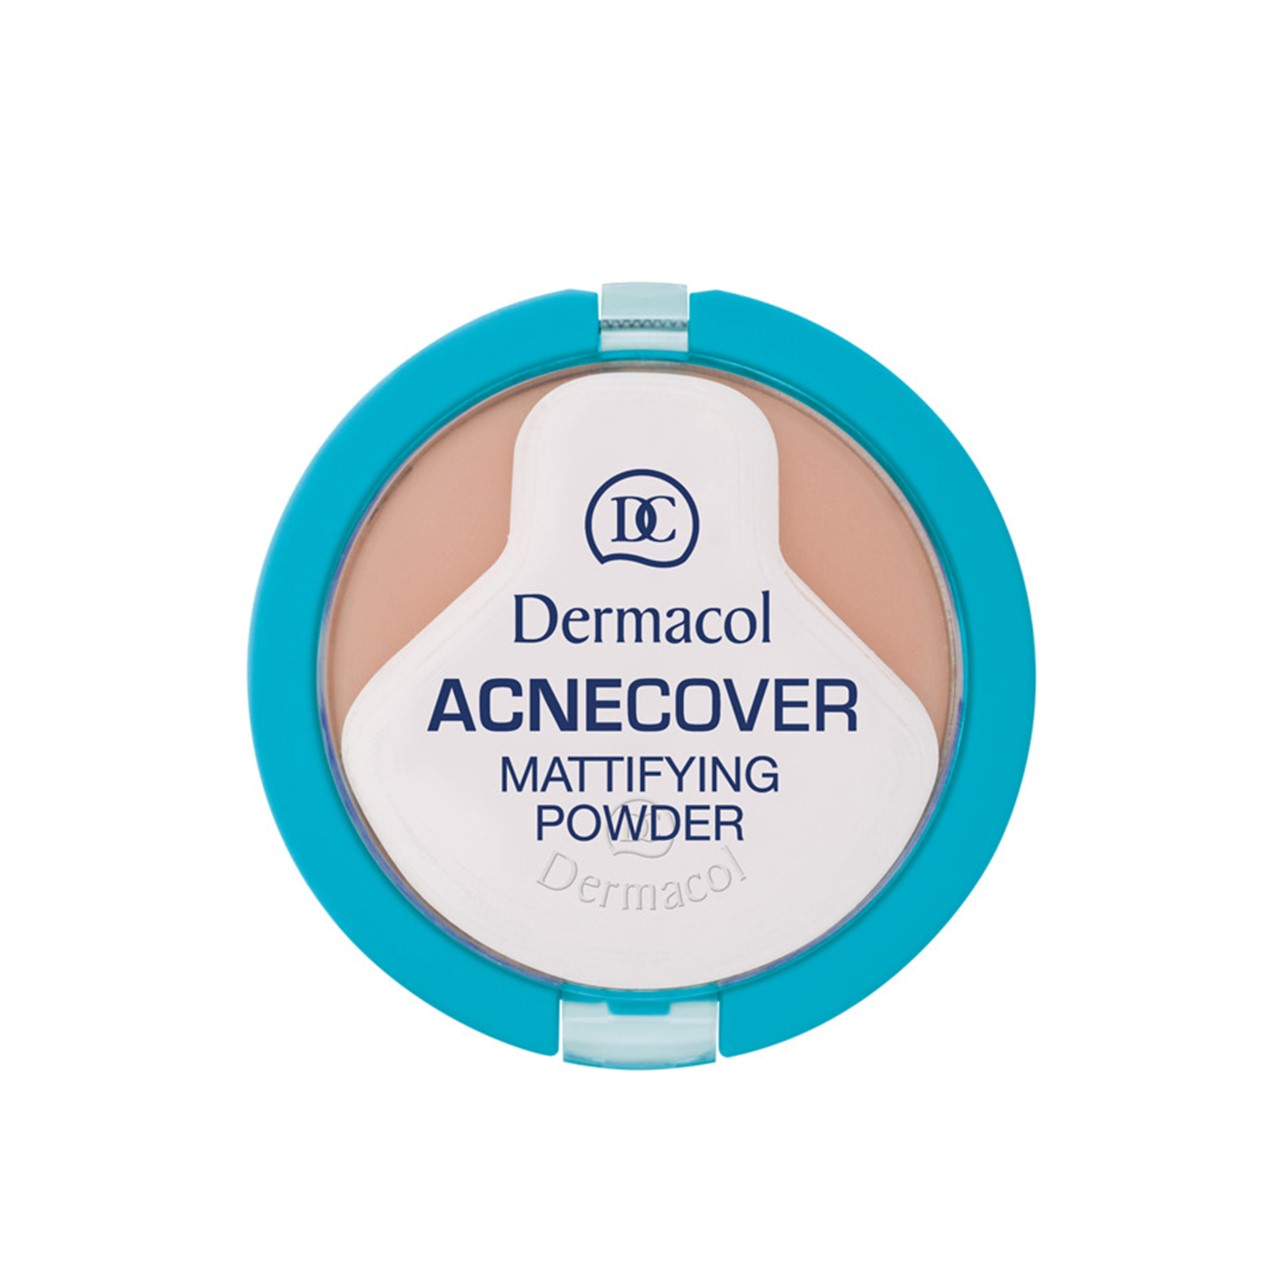 Dermacol Acnecover Mattifying Powder 02 Shell 11g